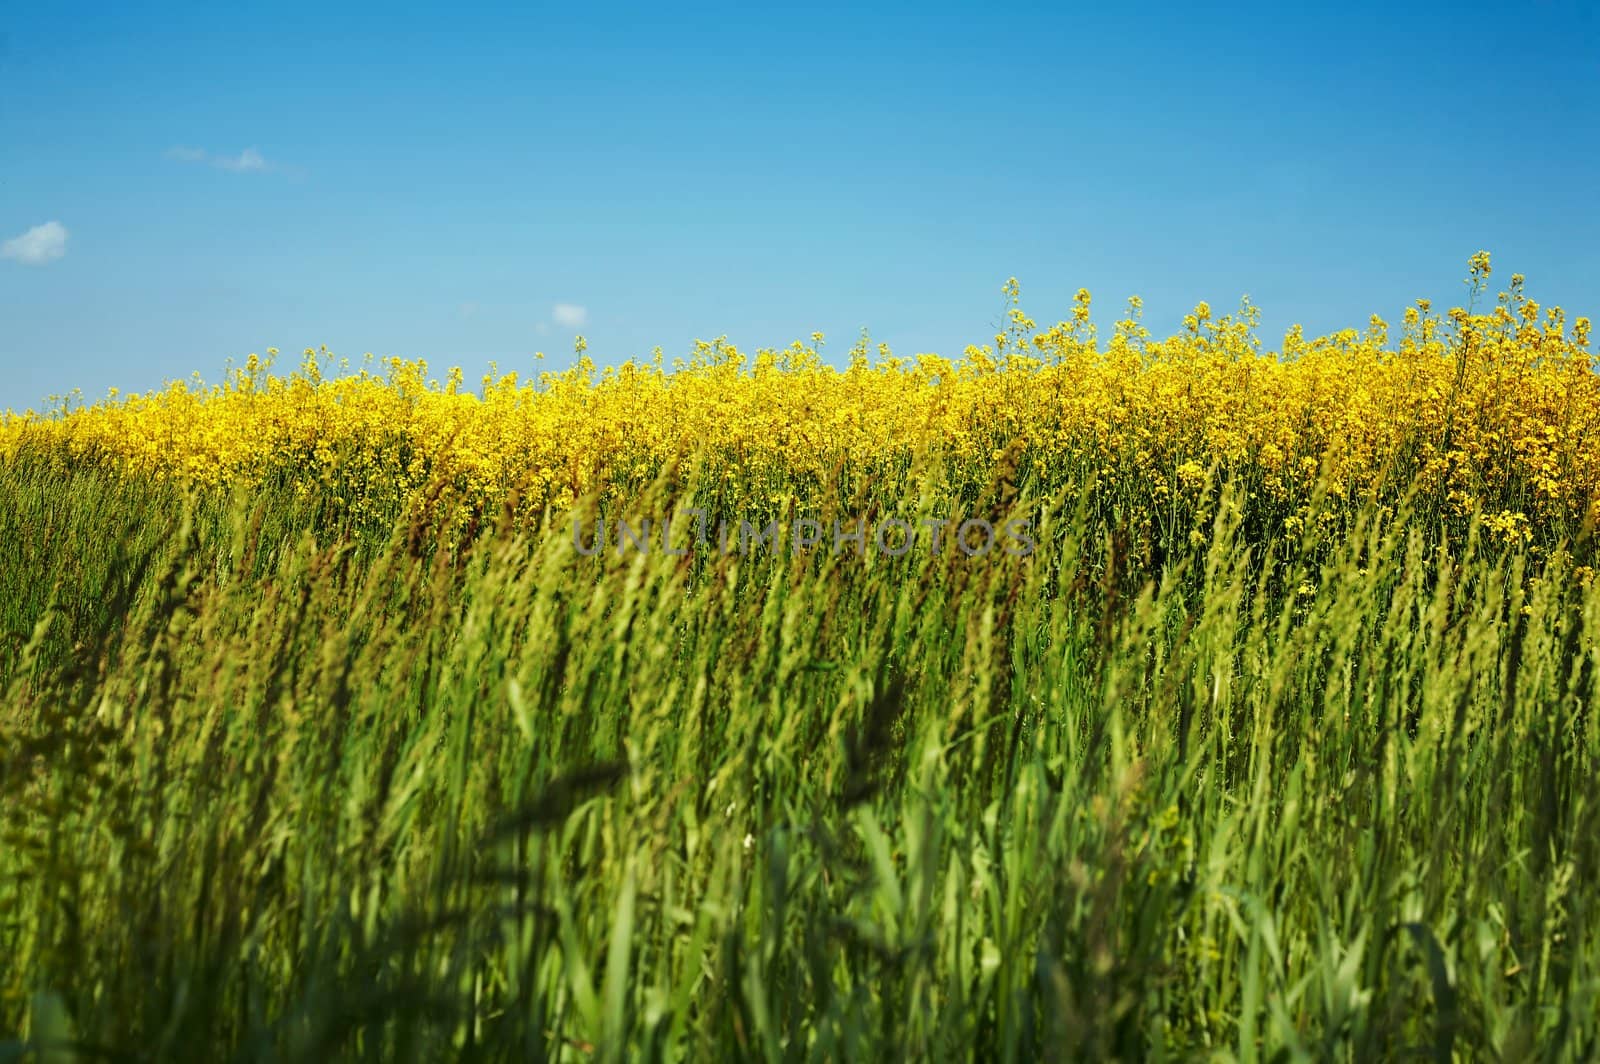 An image of yellow field of rape